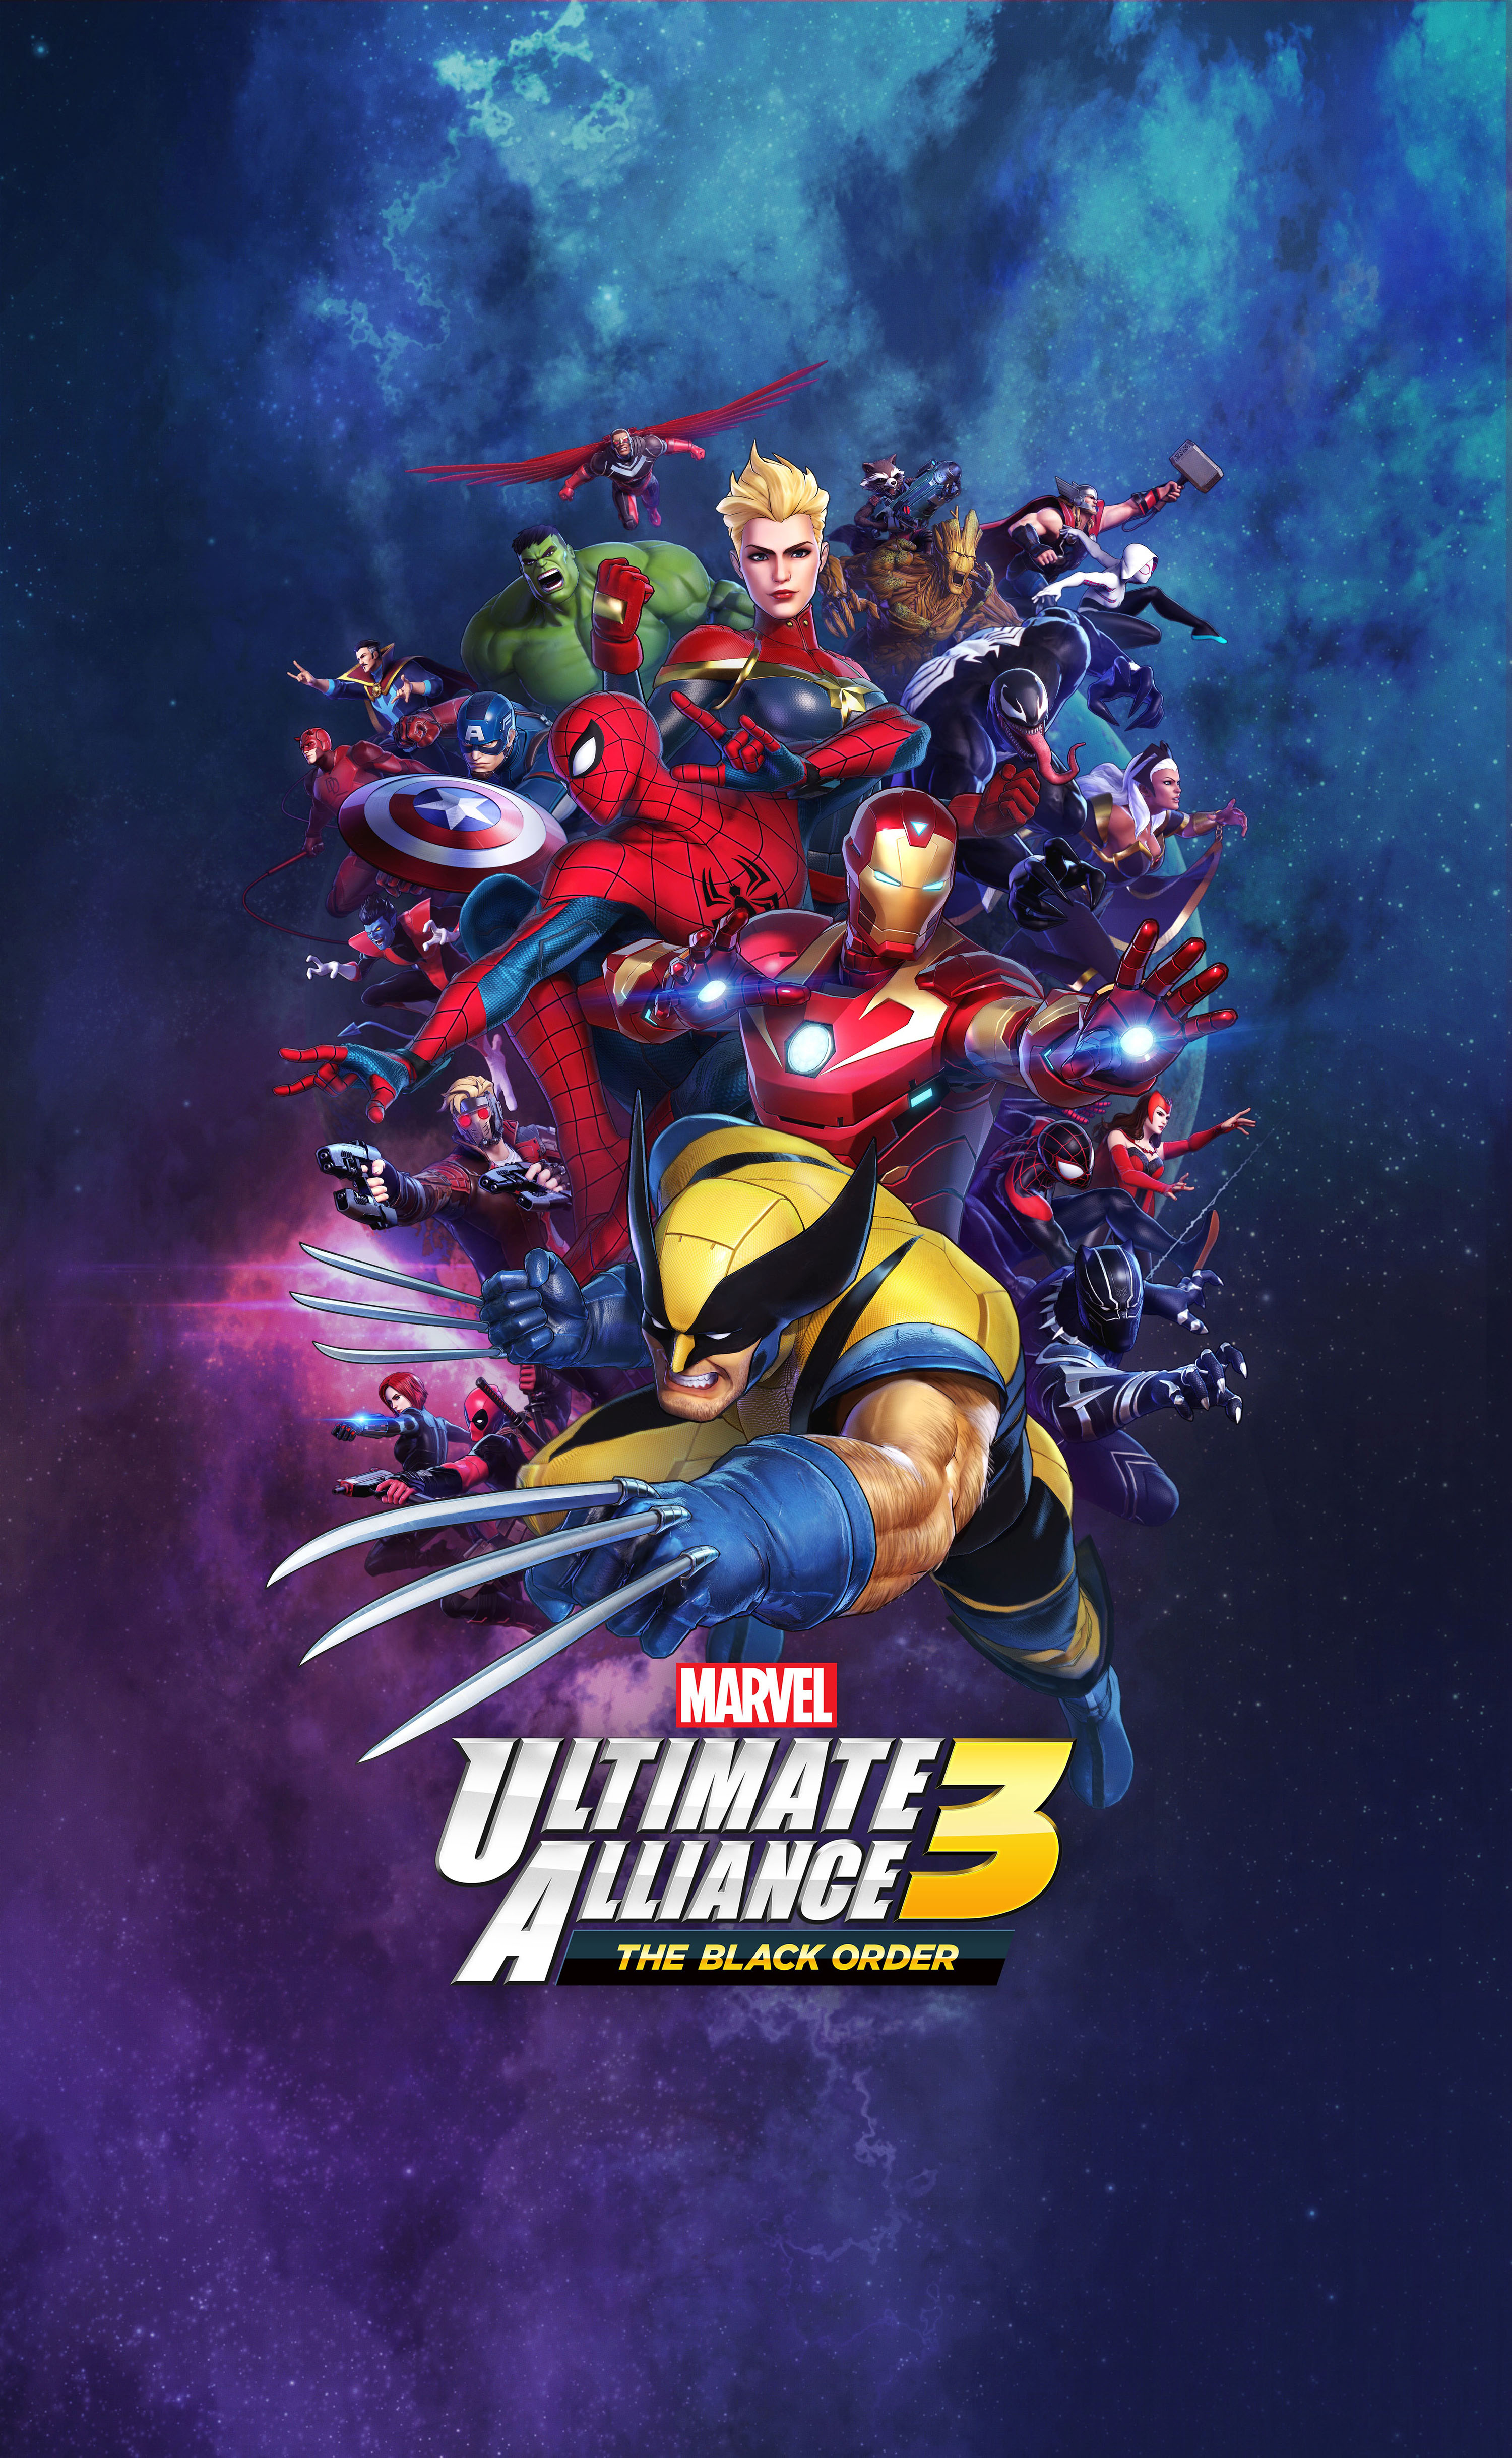 Marvel Ultimate Alliance 3 The Black